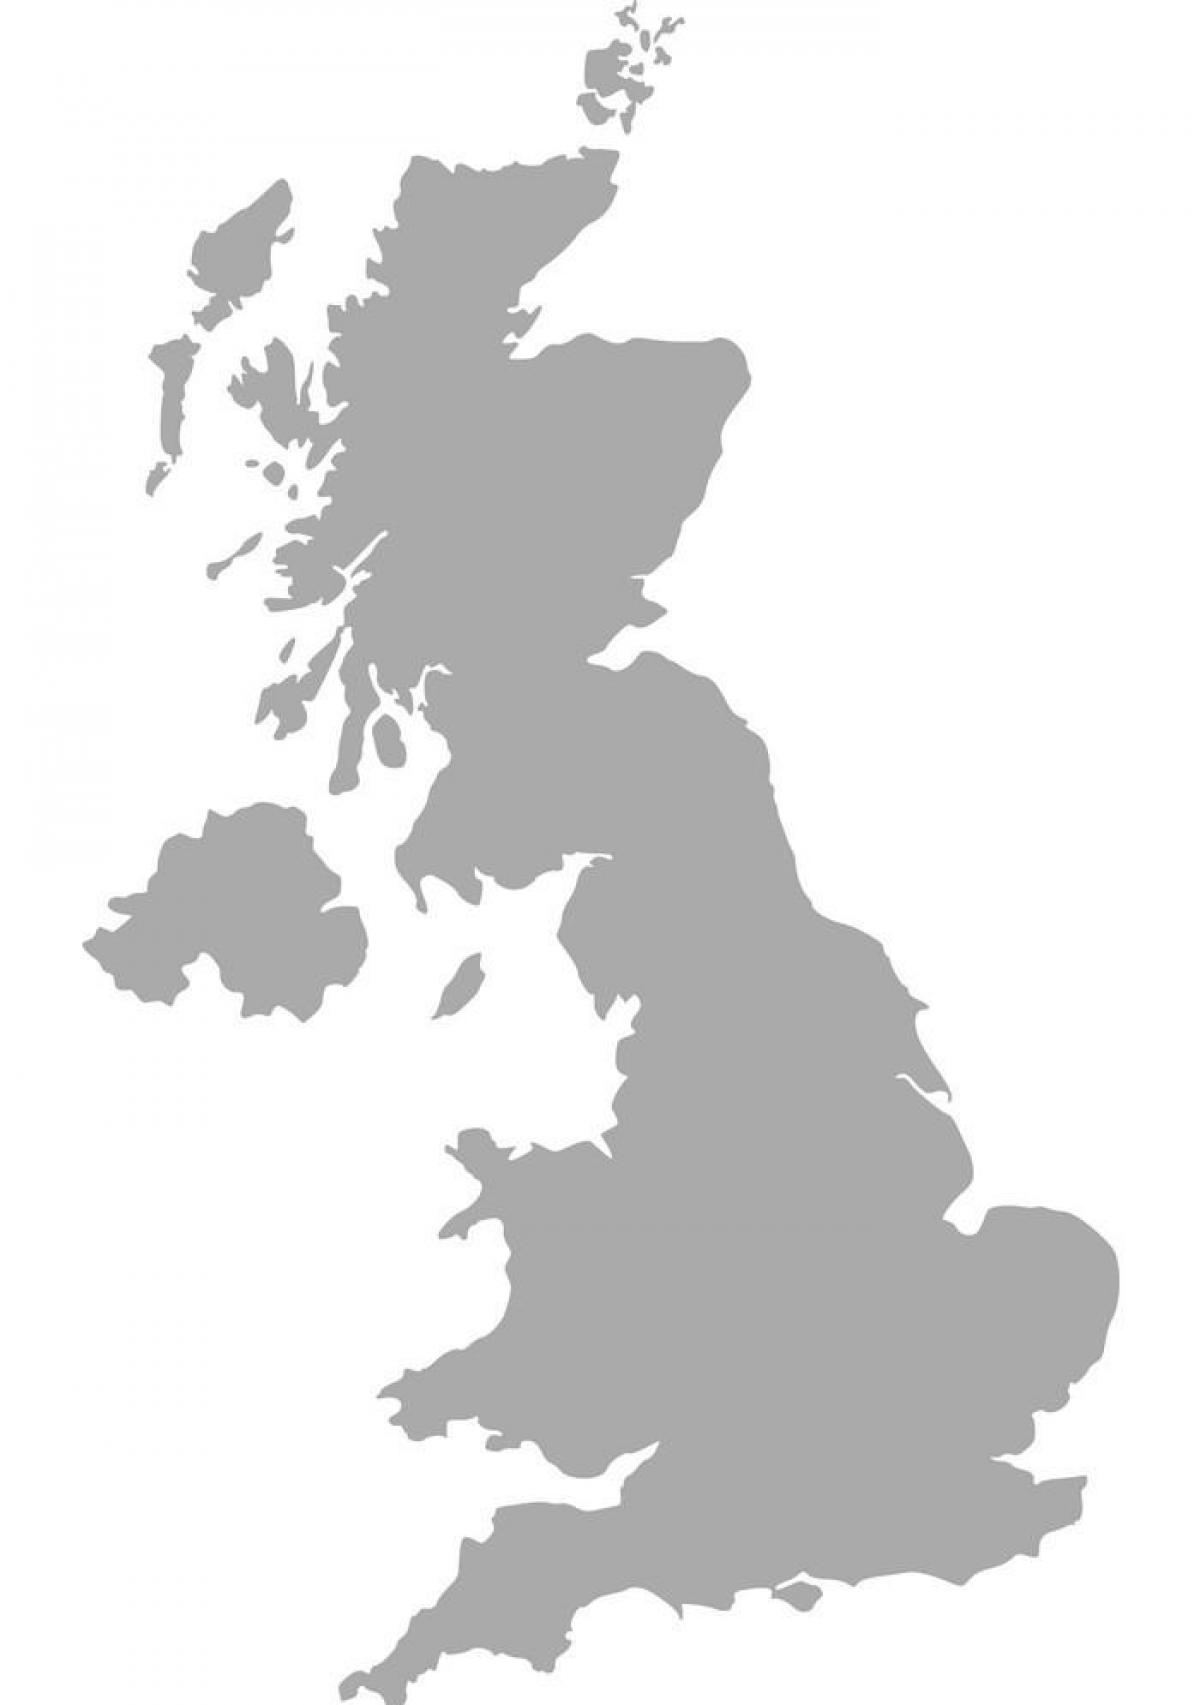 United Kingdom (UK) vector map